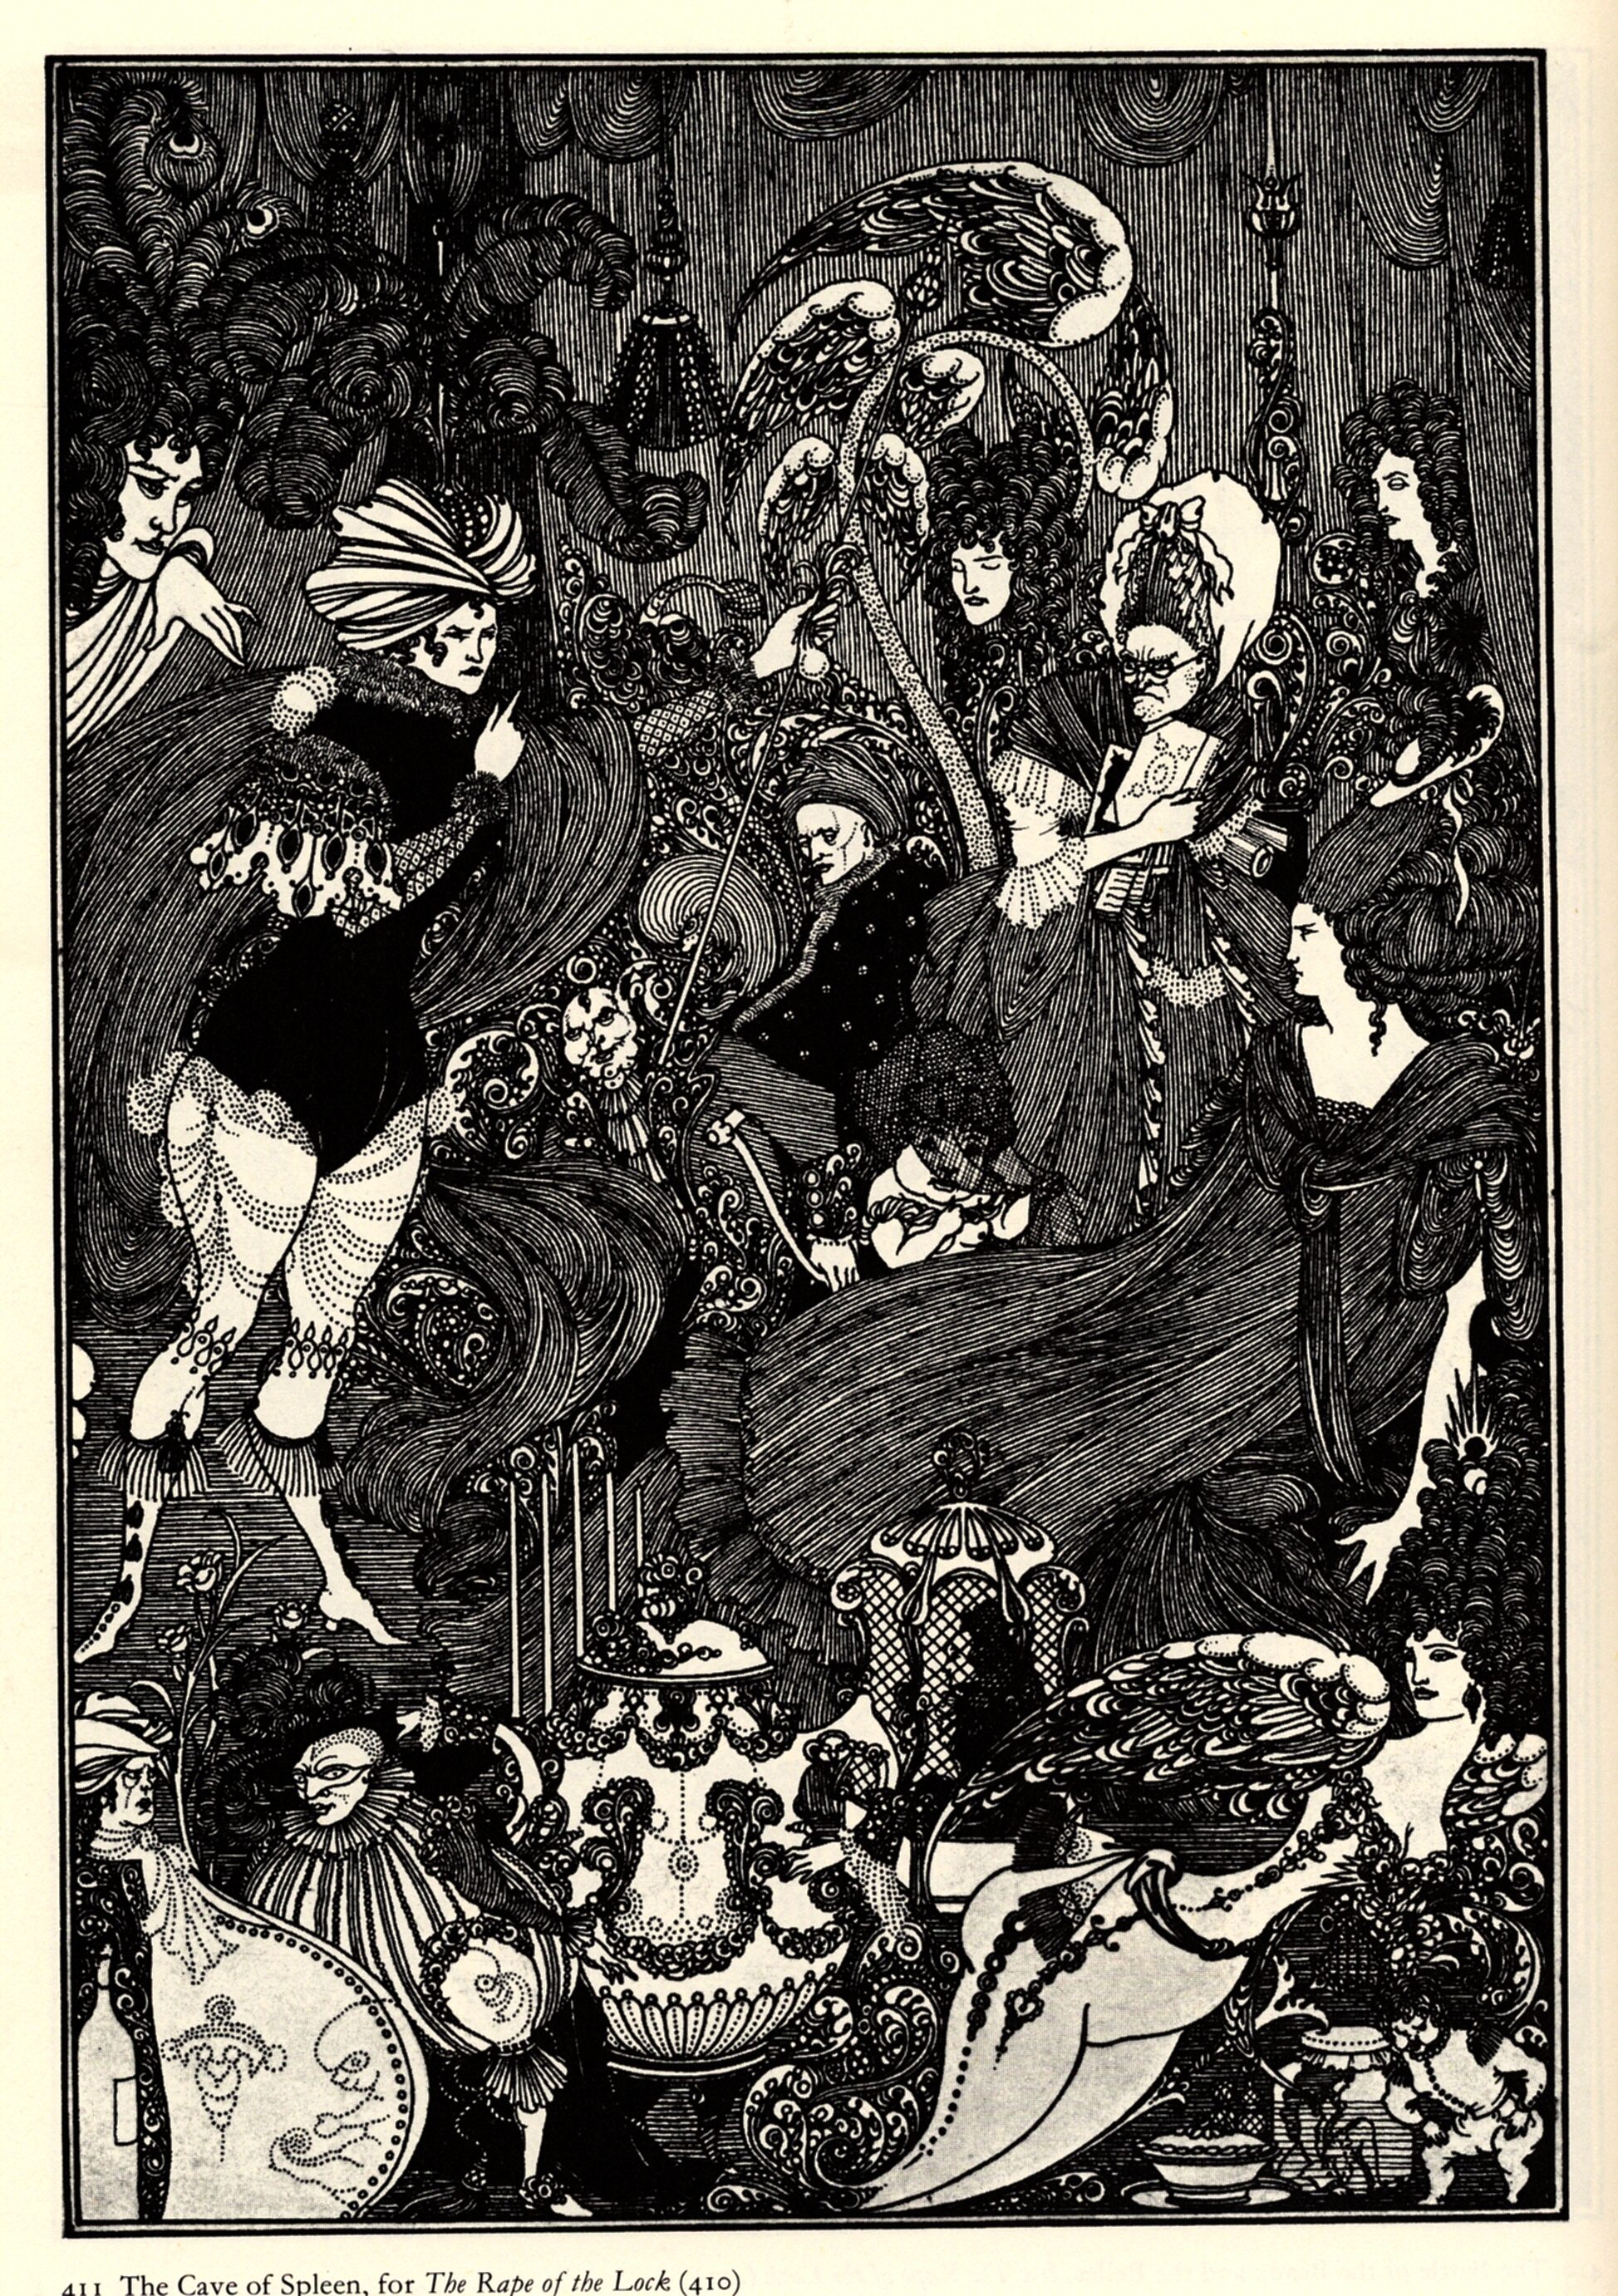 De Grot van Spleen - Aubrey Beardsley by Aubrey Beardsley - 1896 - 25.5 x 17.3 cm 